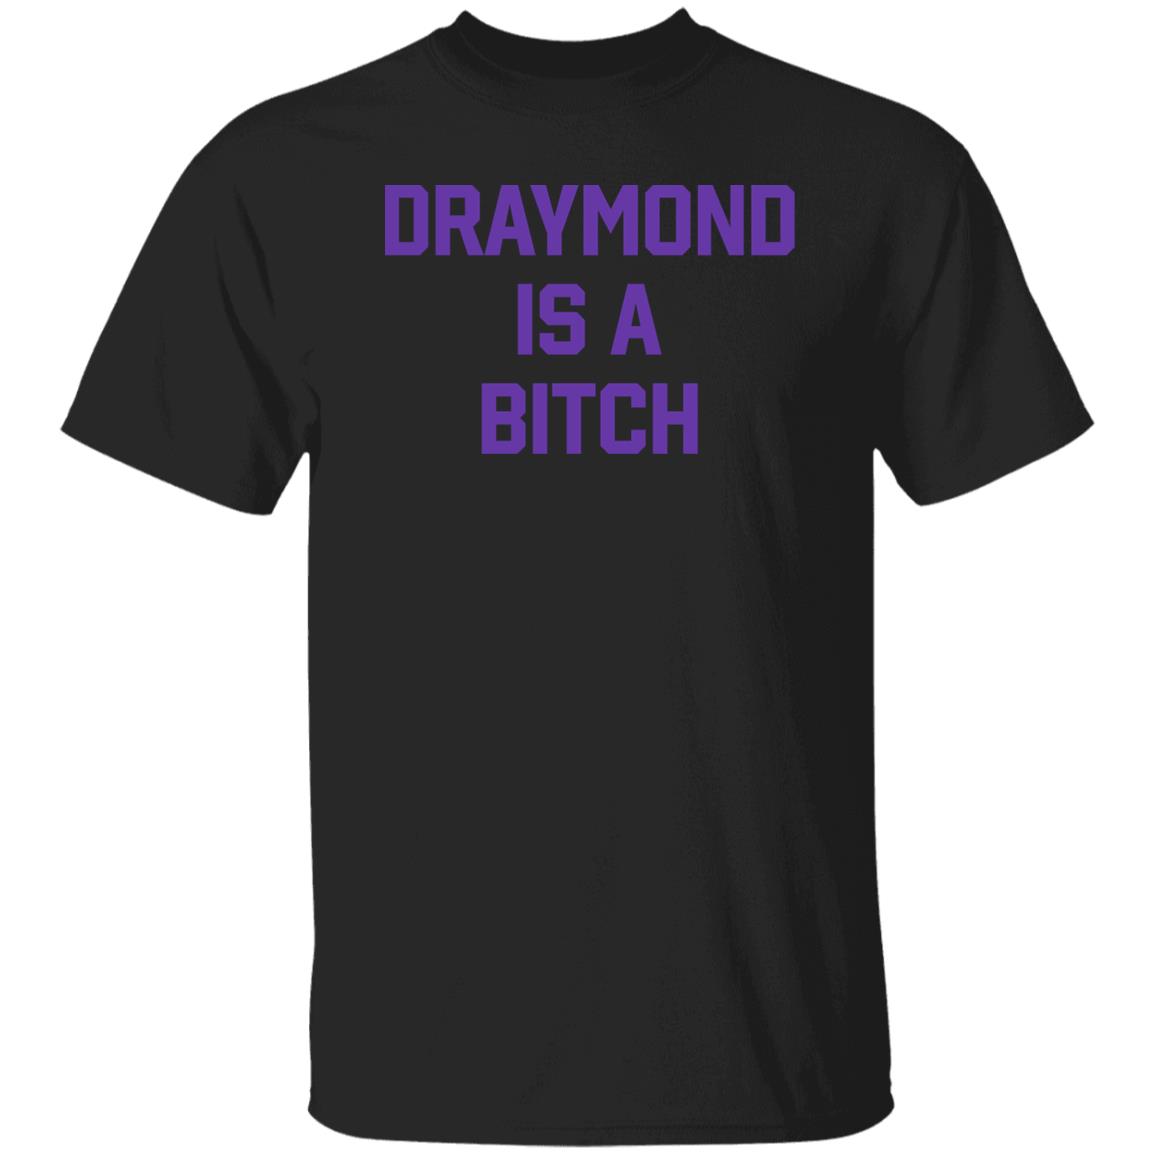 Barstool Sports Draymond Is A Bitch Shirt